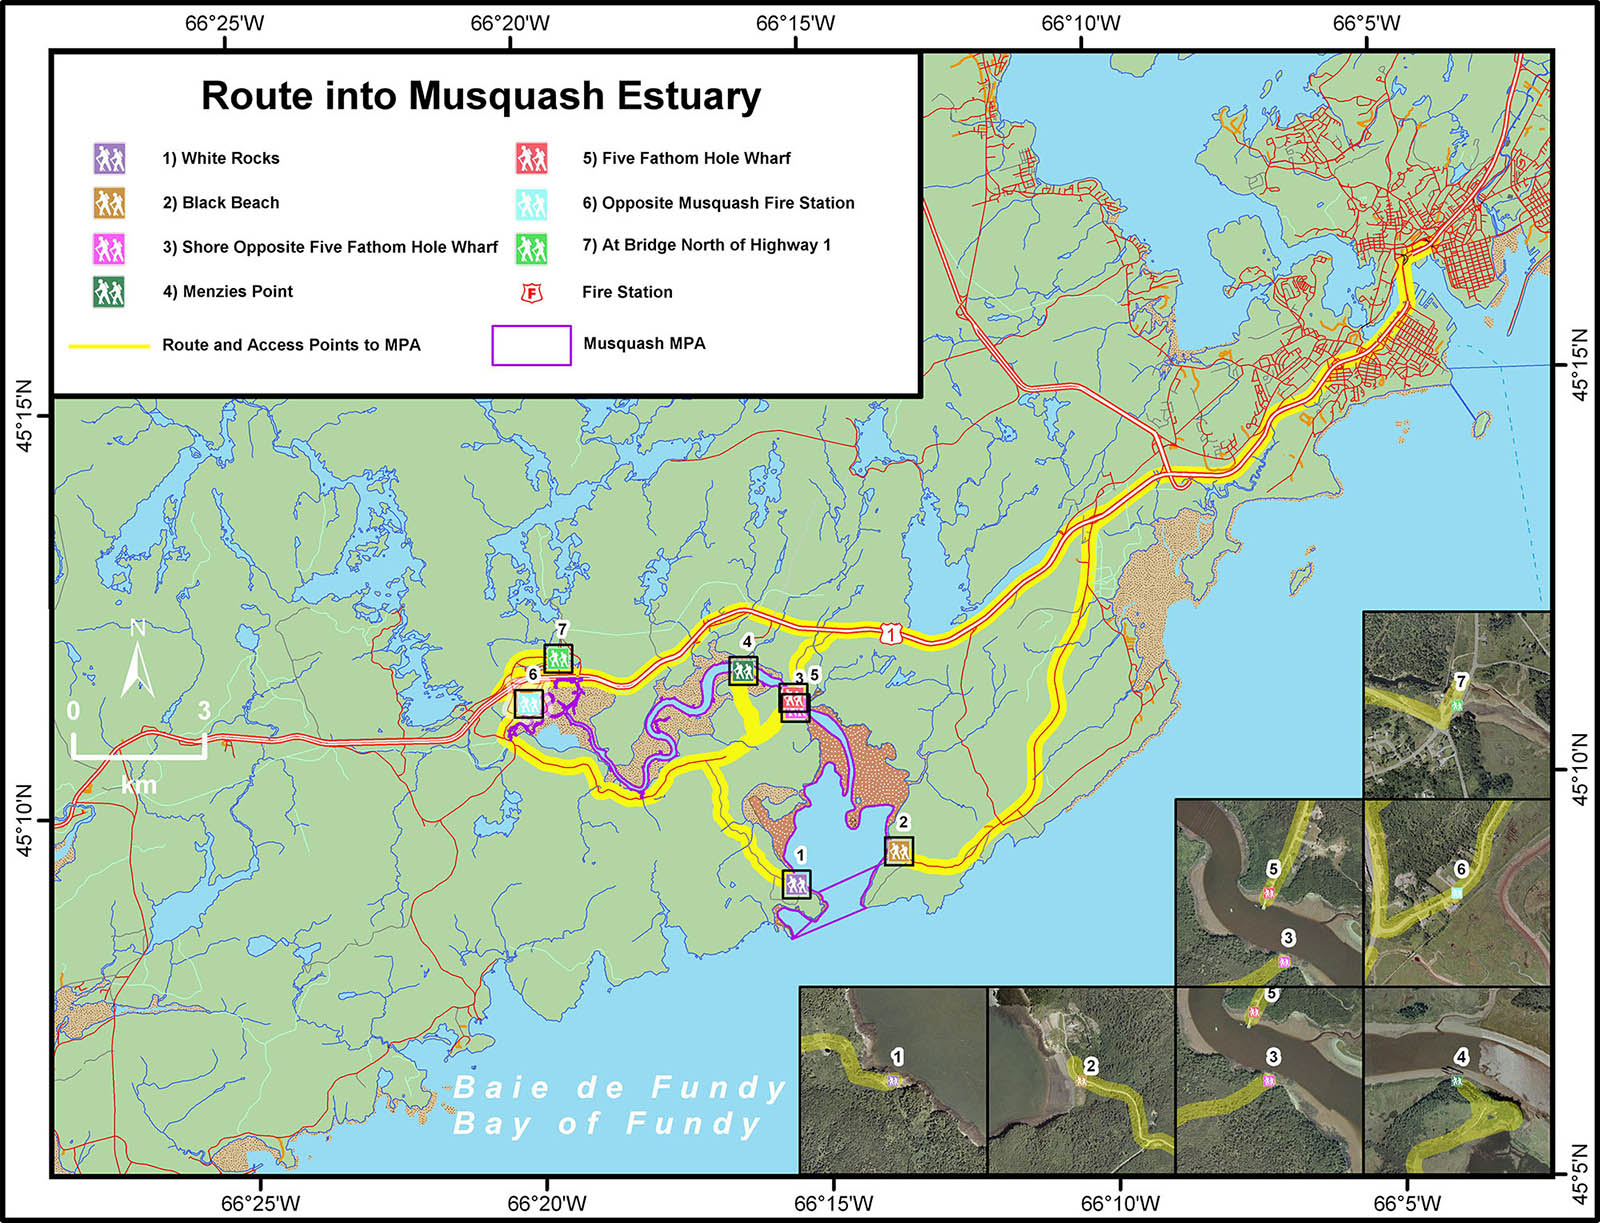 Route into Musquash Estuary